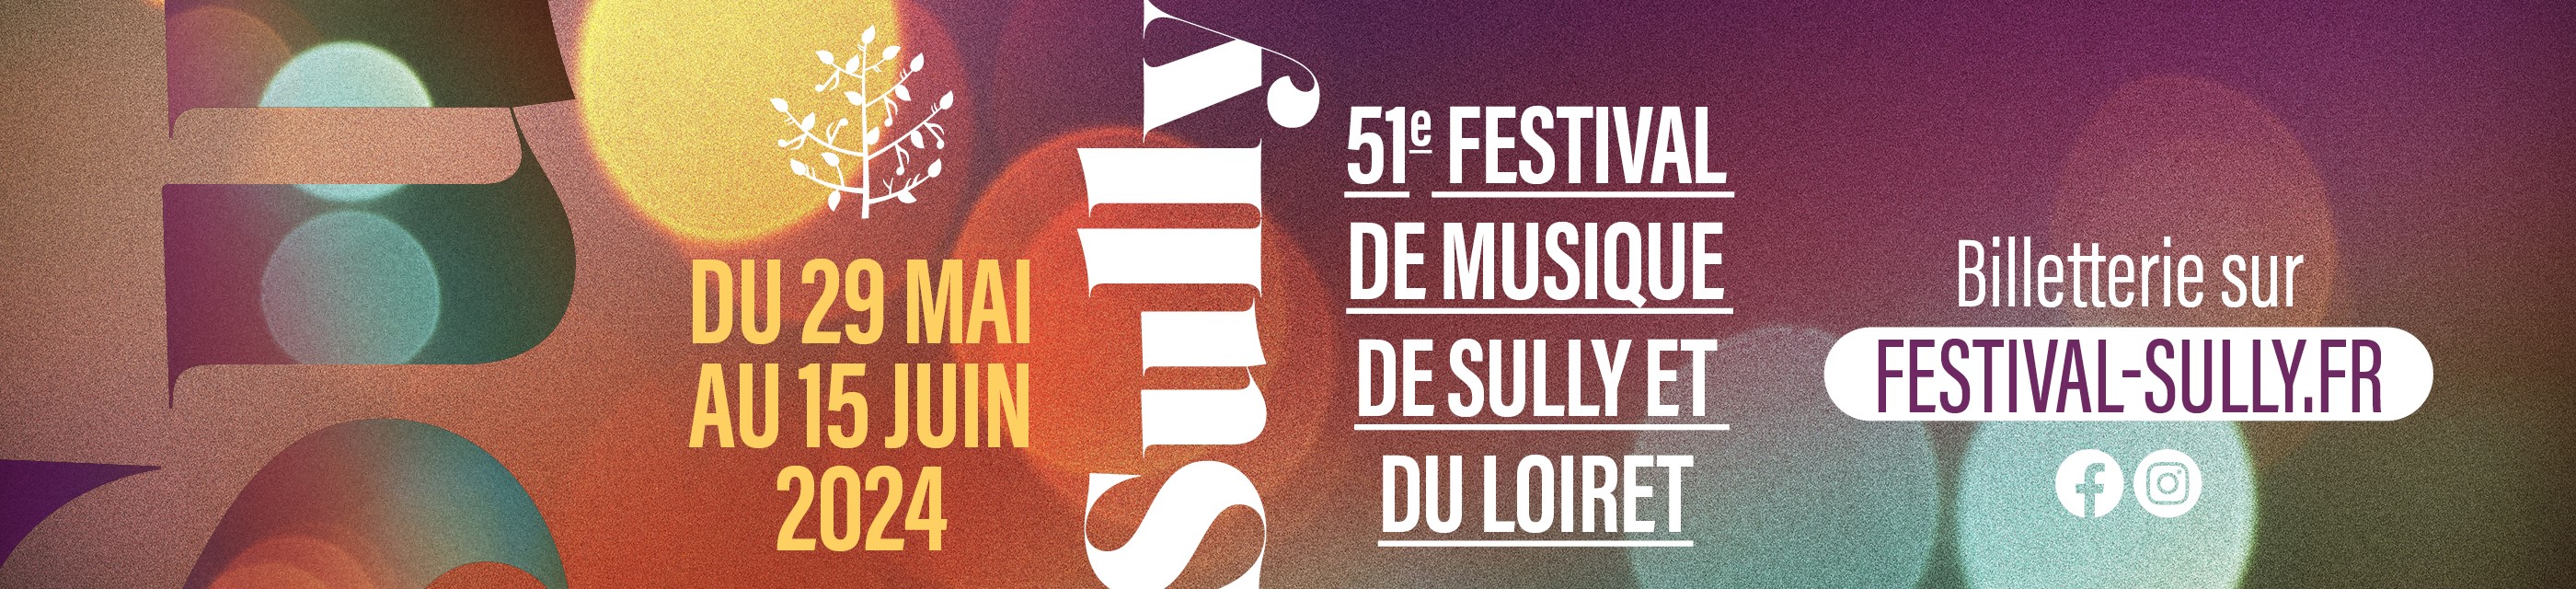 51e Festival de Sully